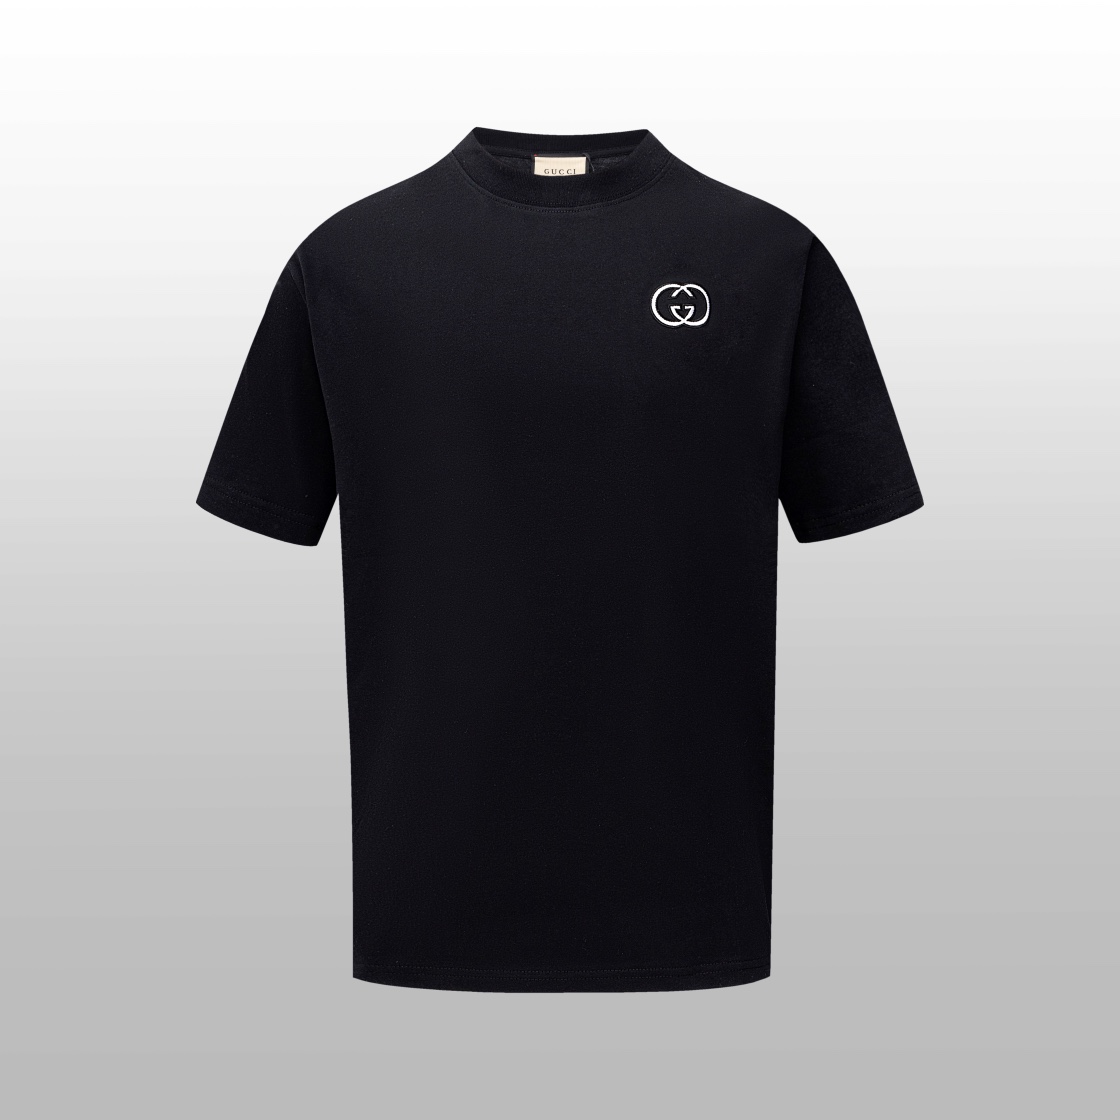 Gucci Clothing T-Shirt Black White Embroidery Unisex Short Sleeve